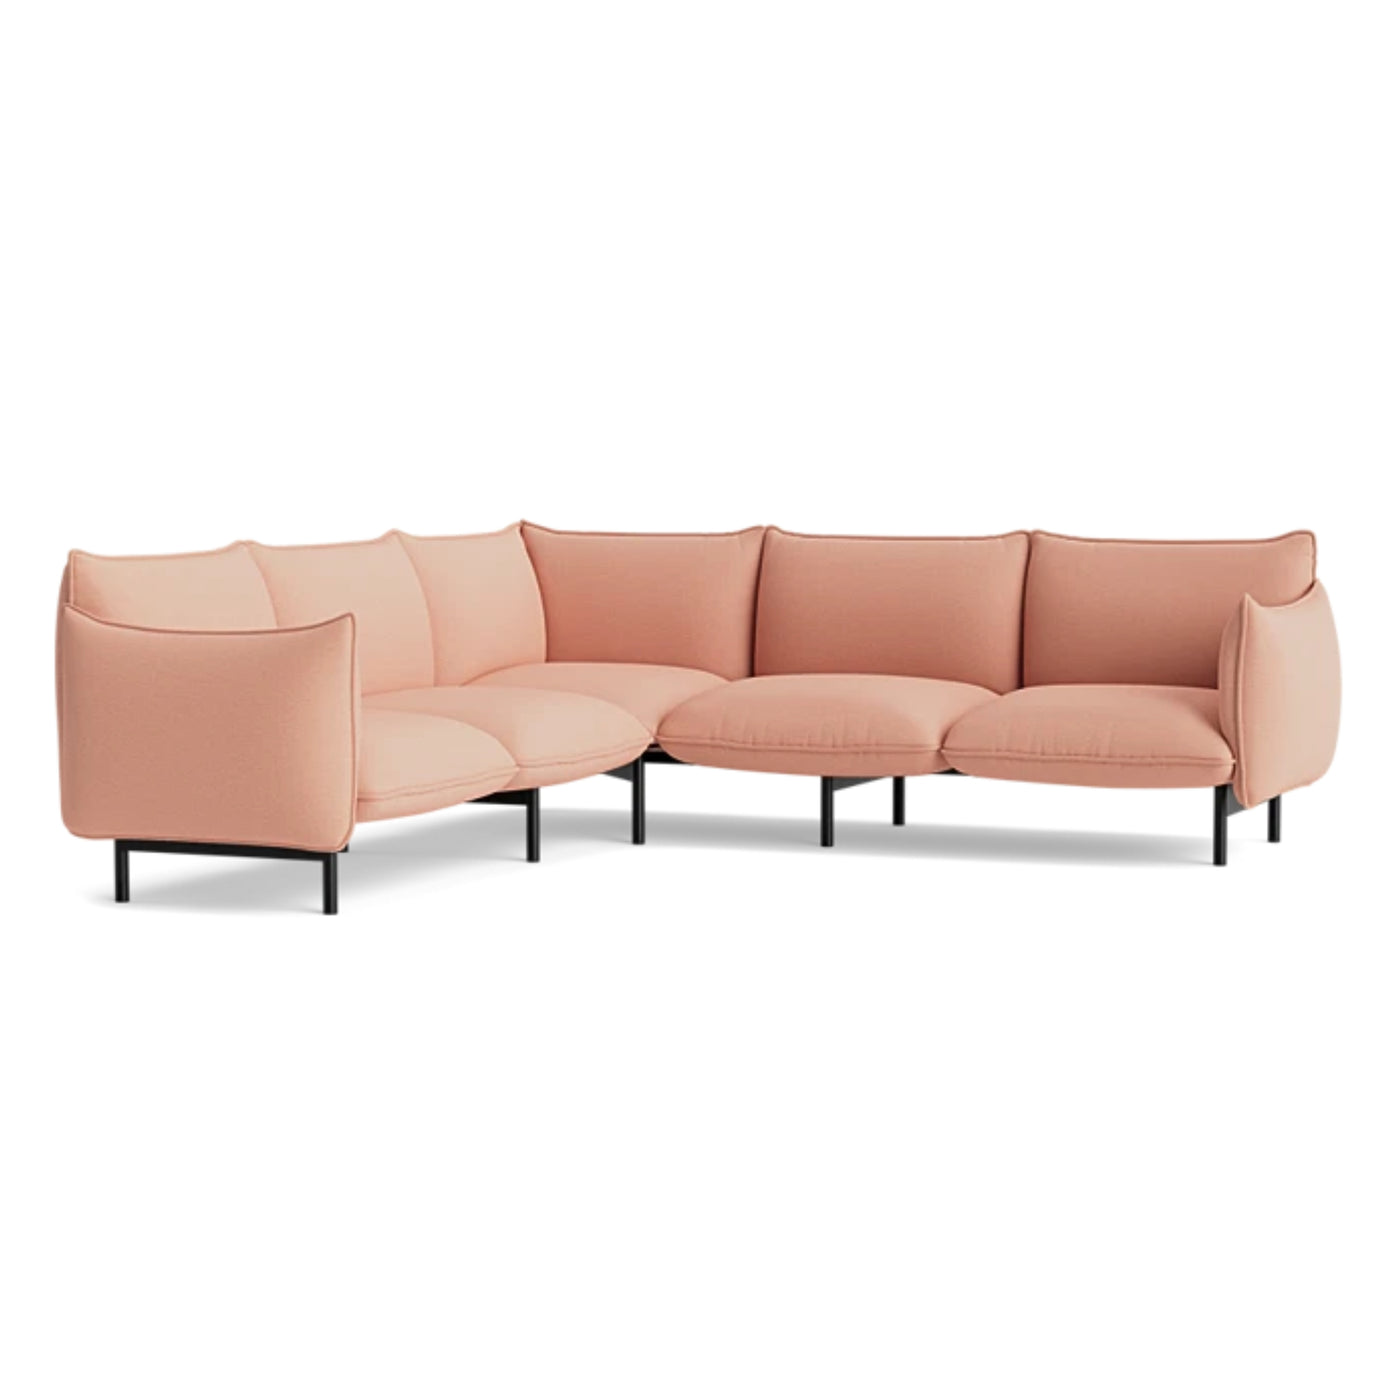 Normann Copenhagen Ark 4 Seater Corner Modular Sofa at someday designs. #colour_steelcut-trio-515